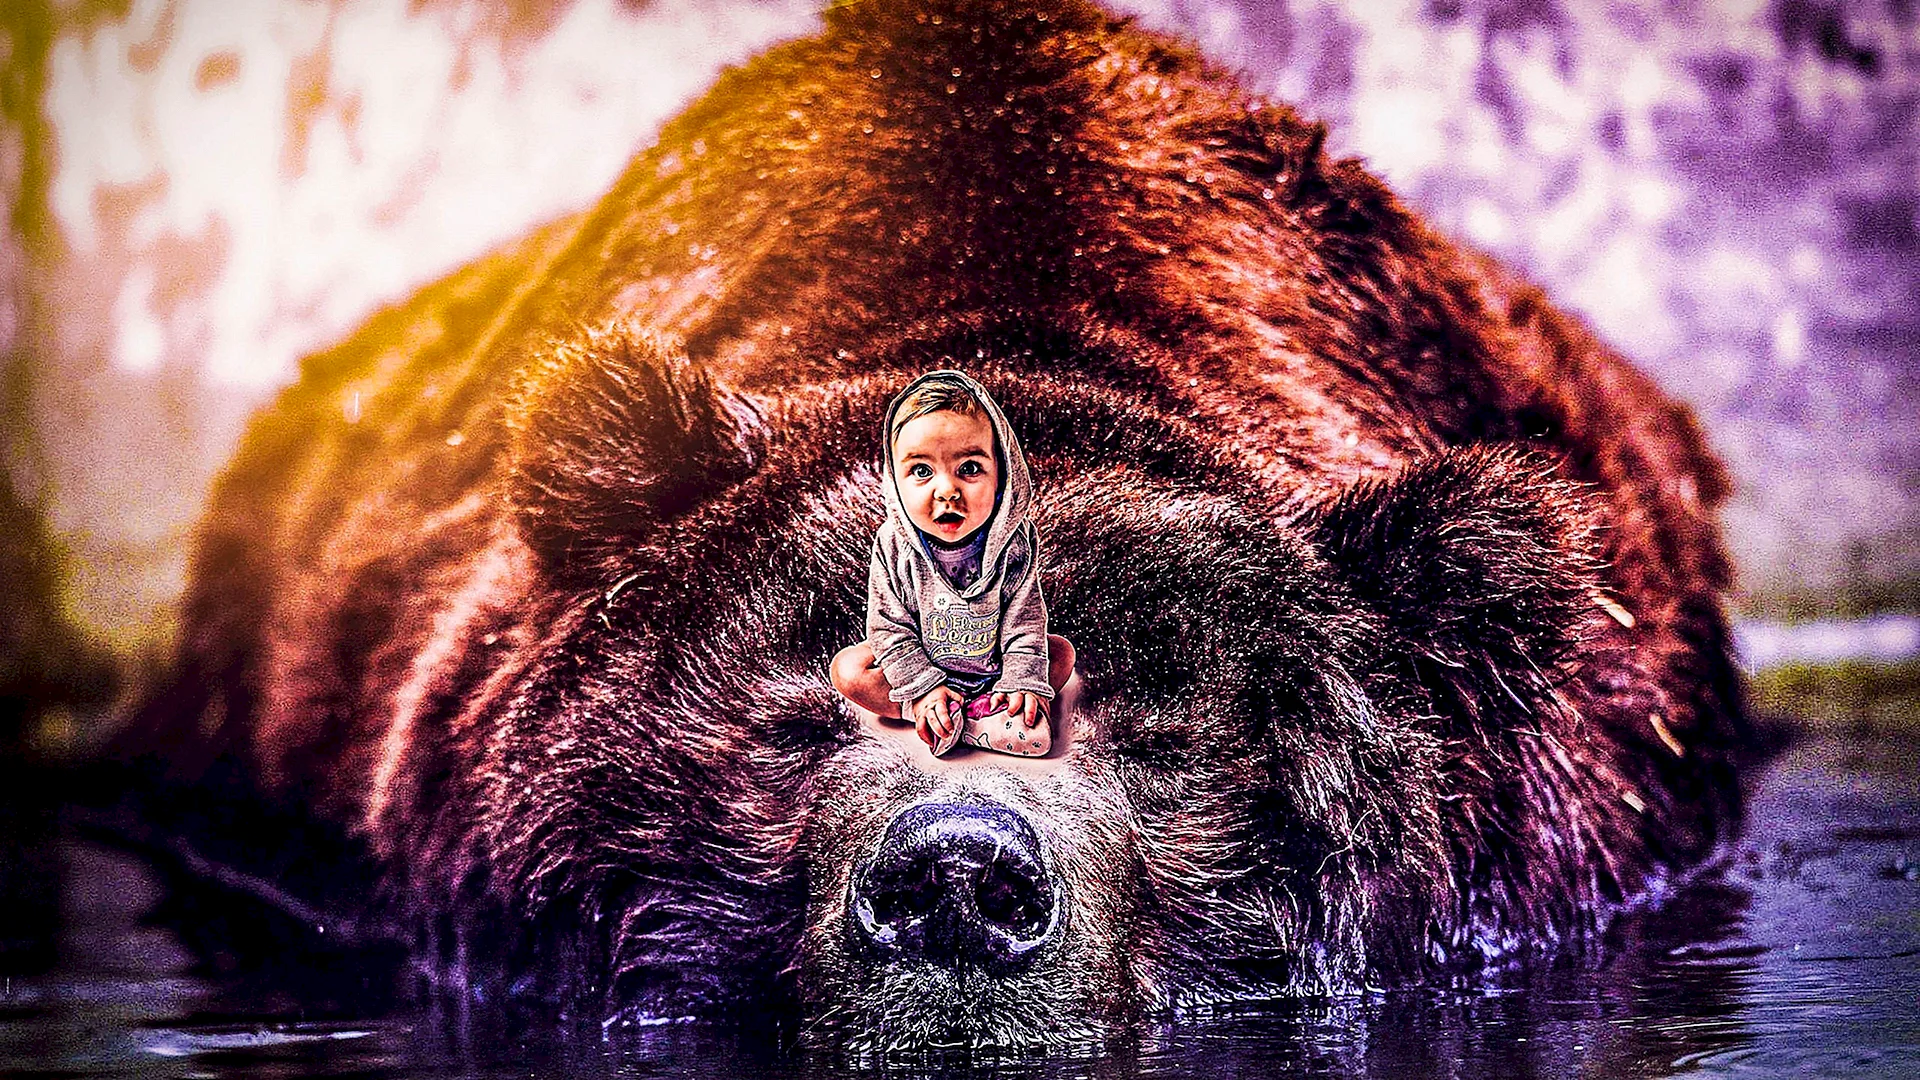 Bear Photoshop Wallpaper